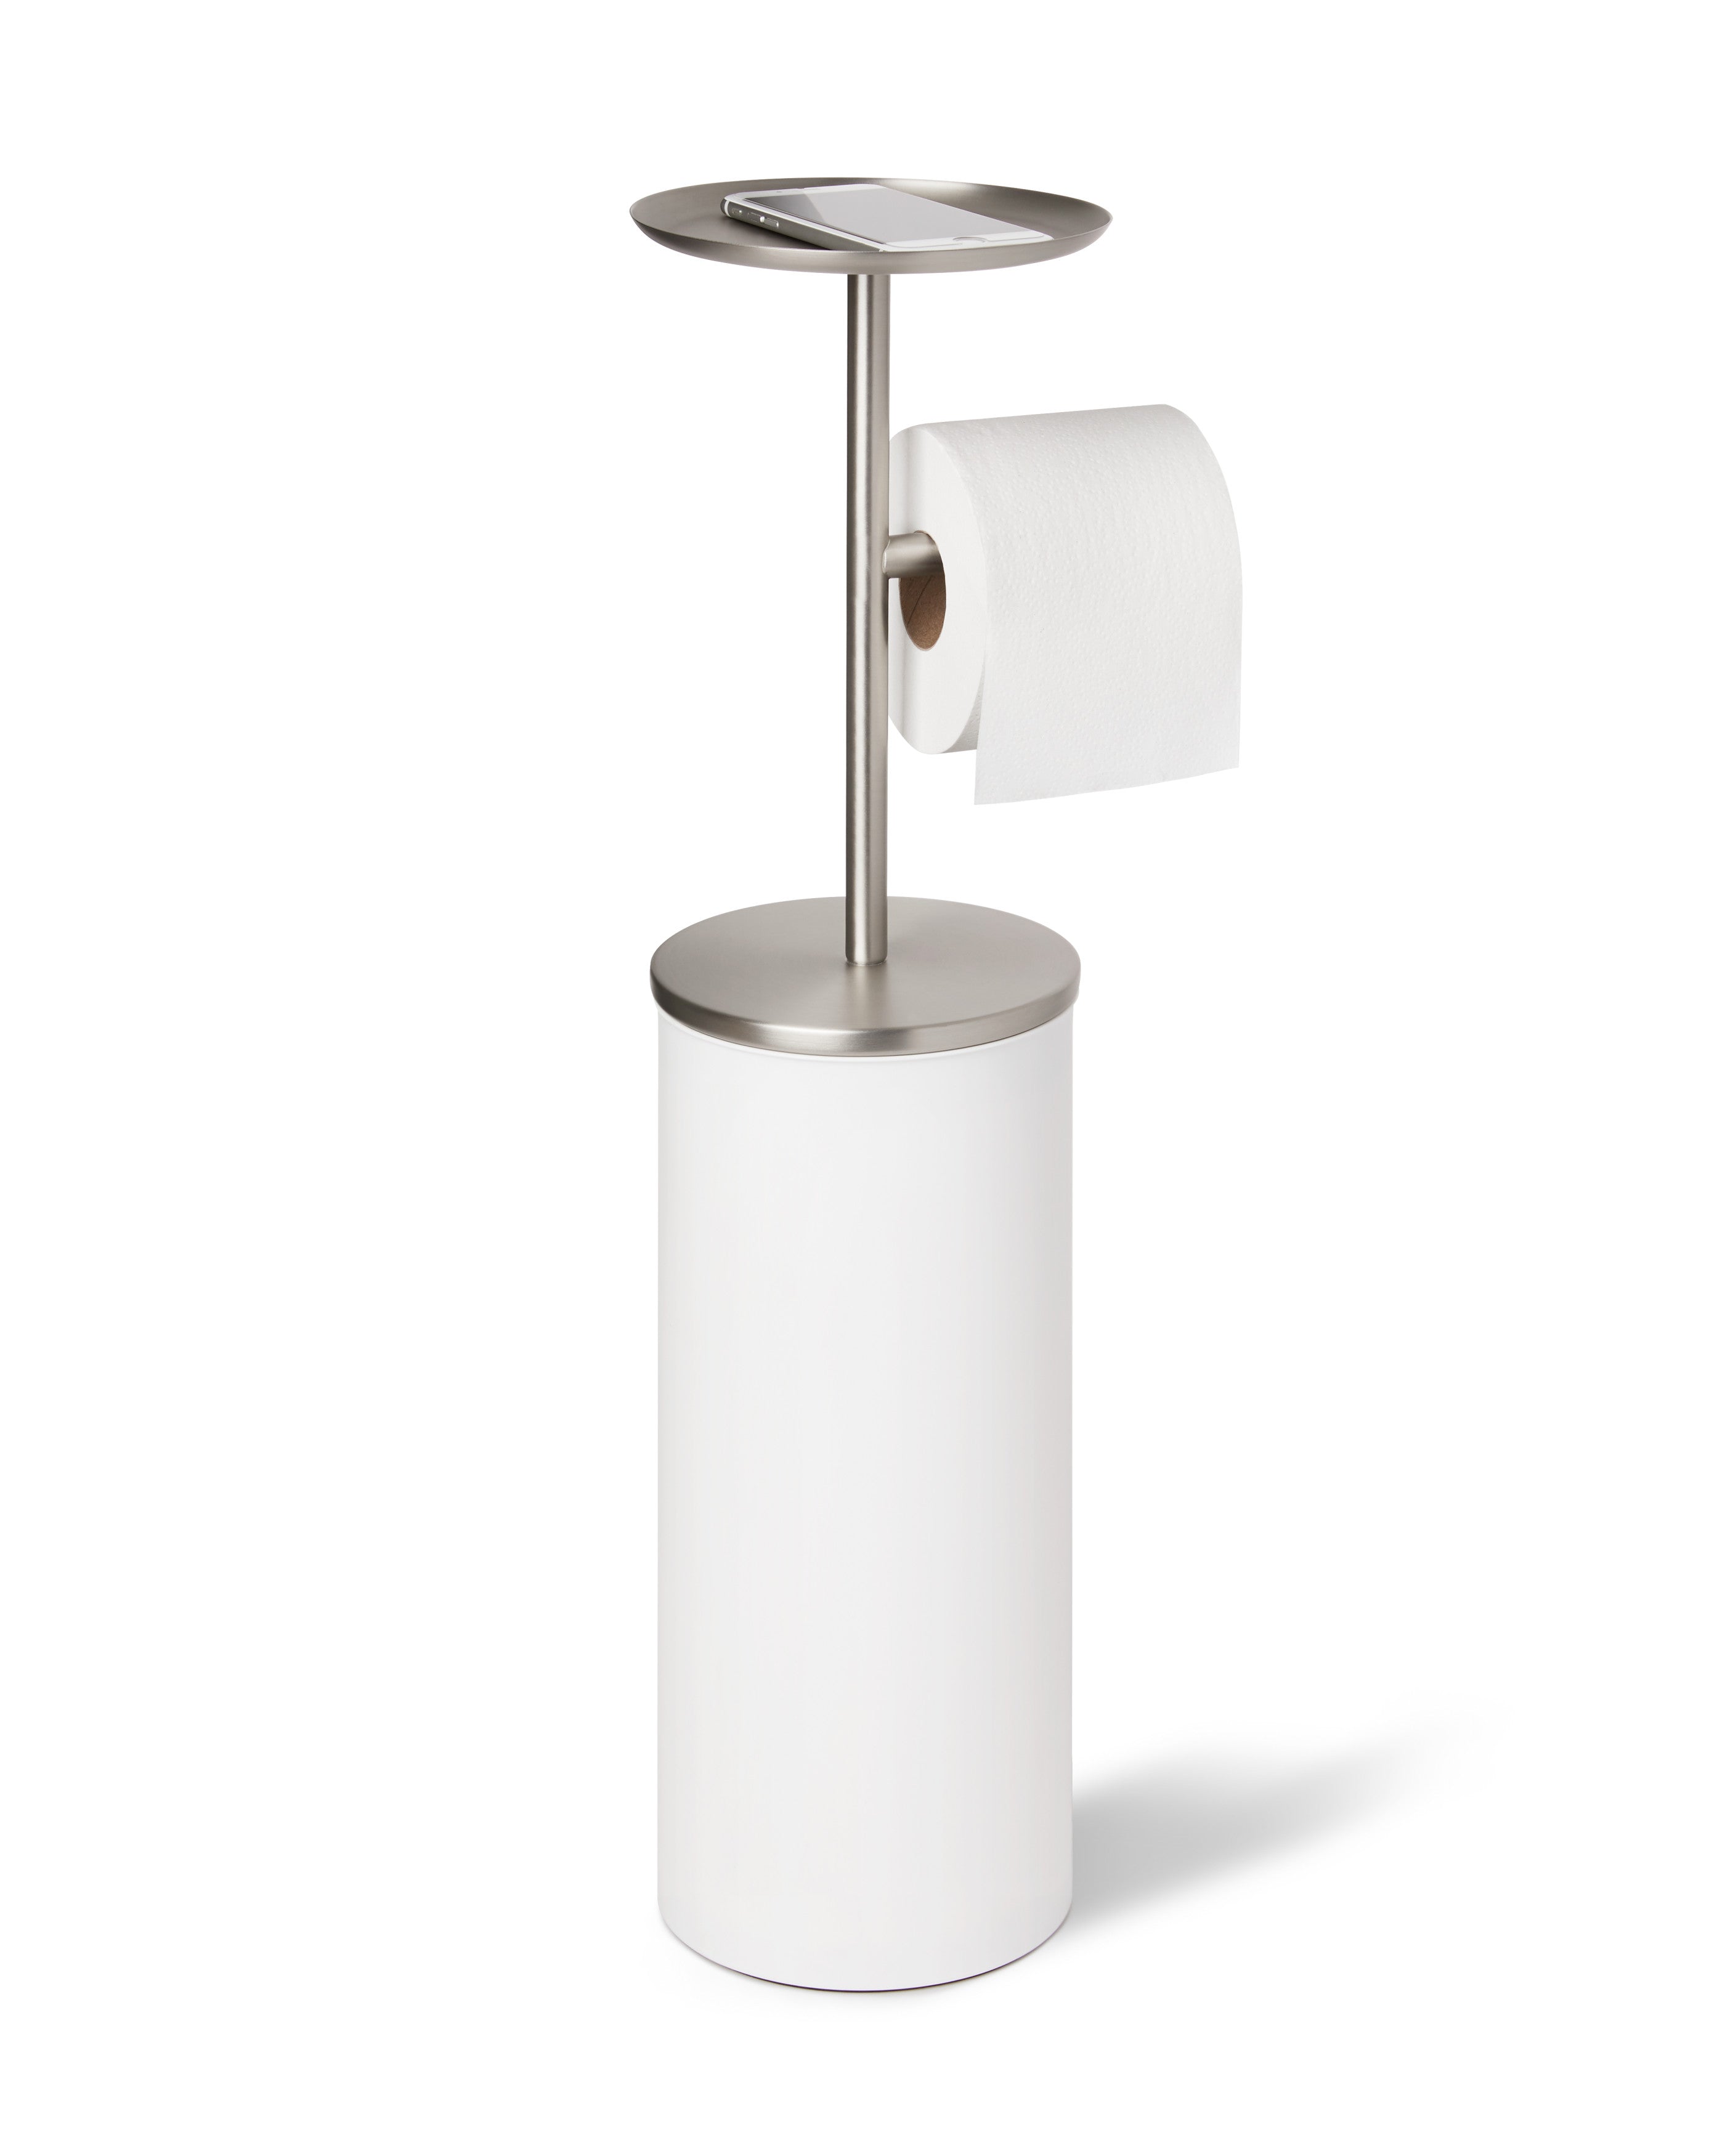 Portaloo Toilet Paper Stand Stylish Umbra | Convenient - 